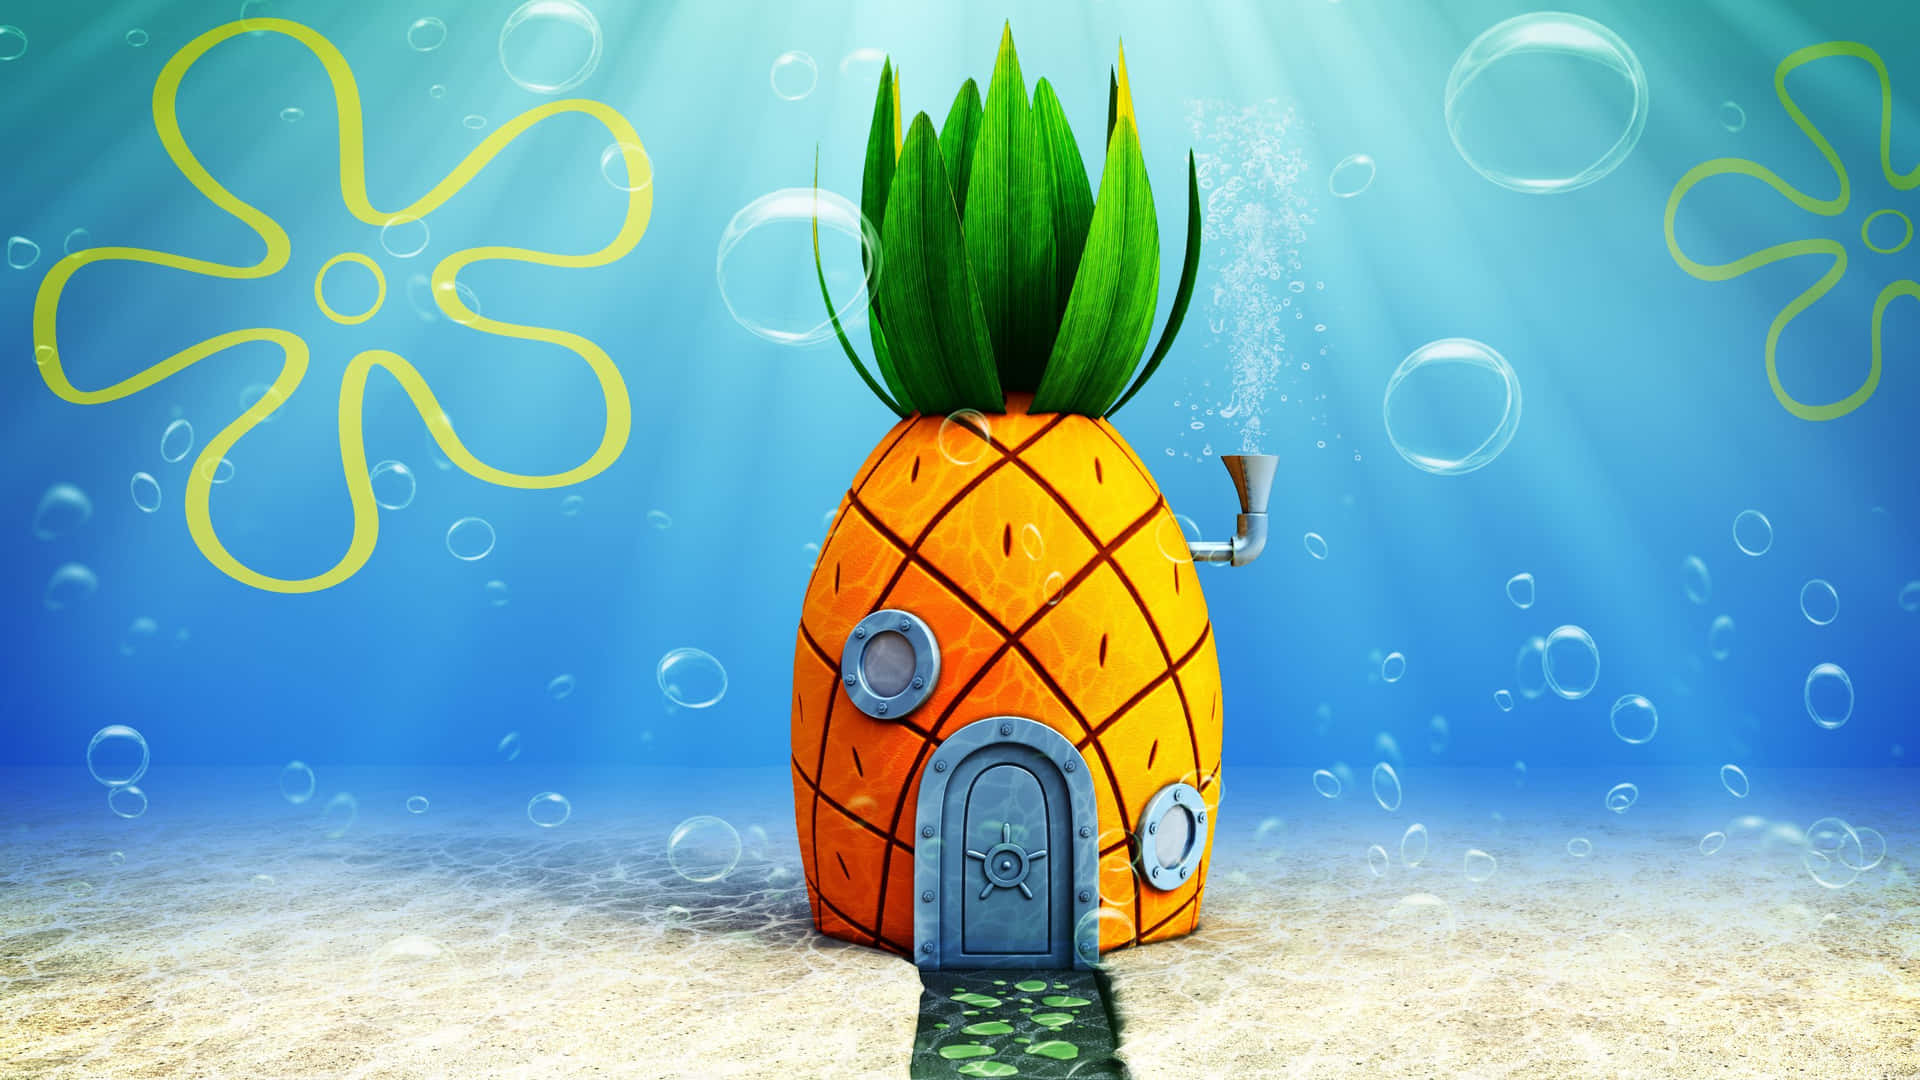 Welcome to Spongebob's Pineapple House Wallpaper